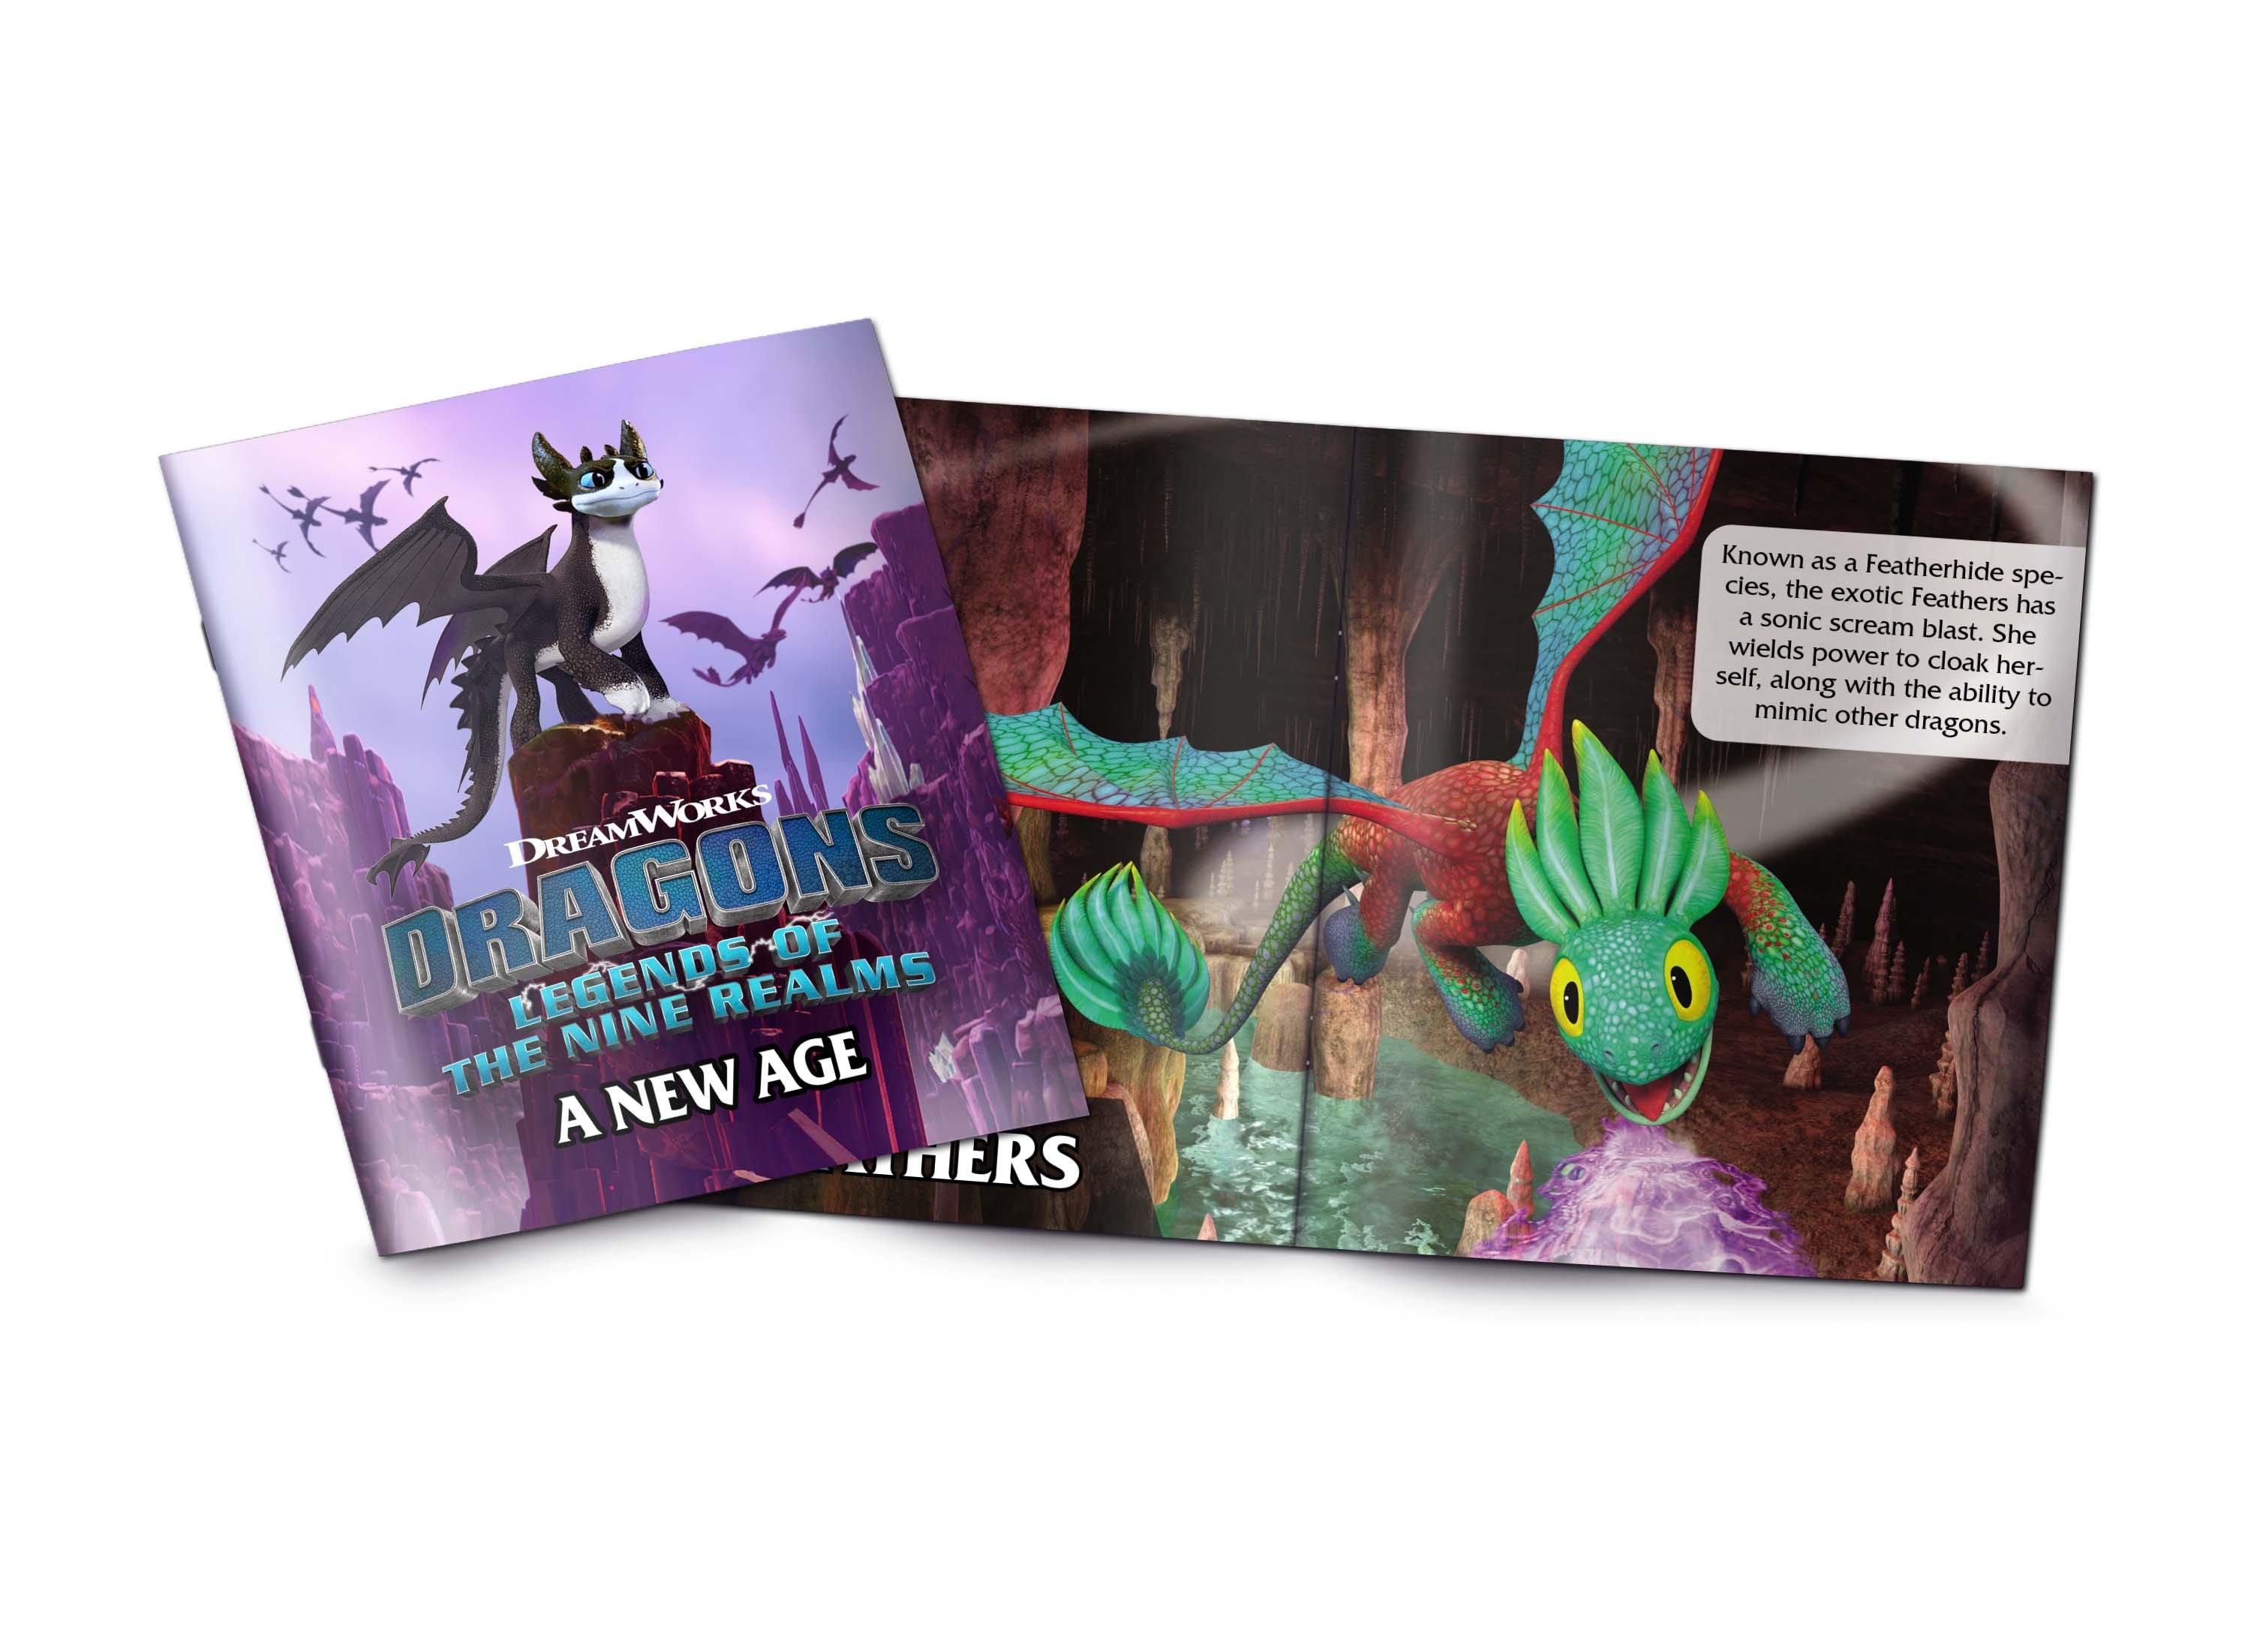 DreamWorks Dragons: Legends of the Nine Realms - PlayStation 4